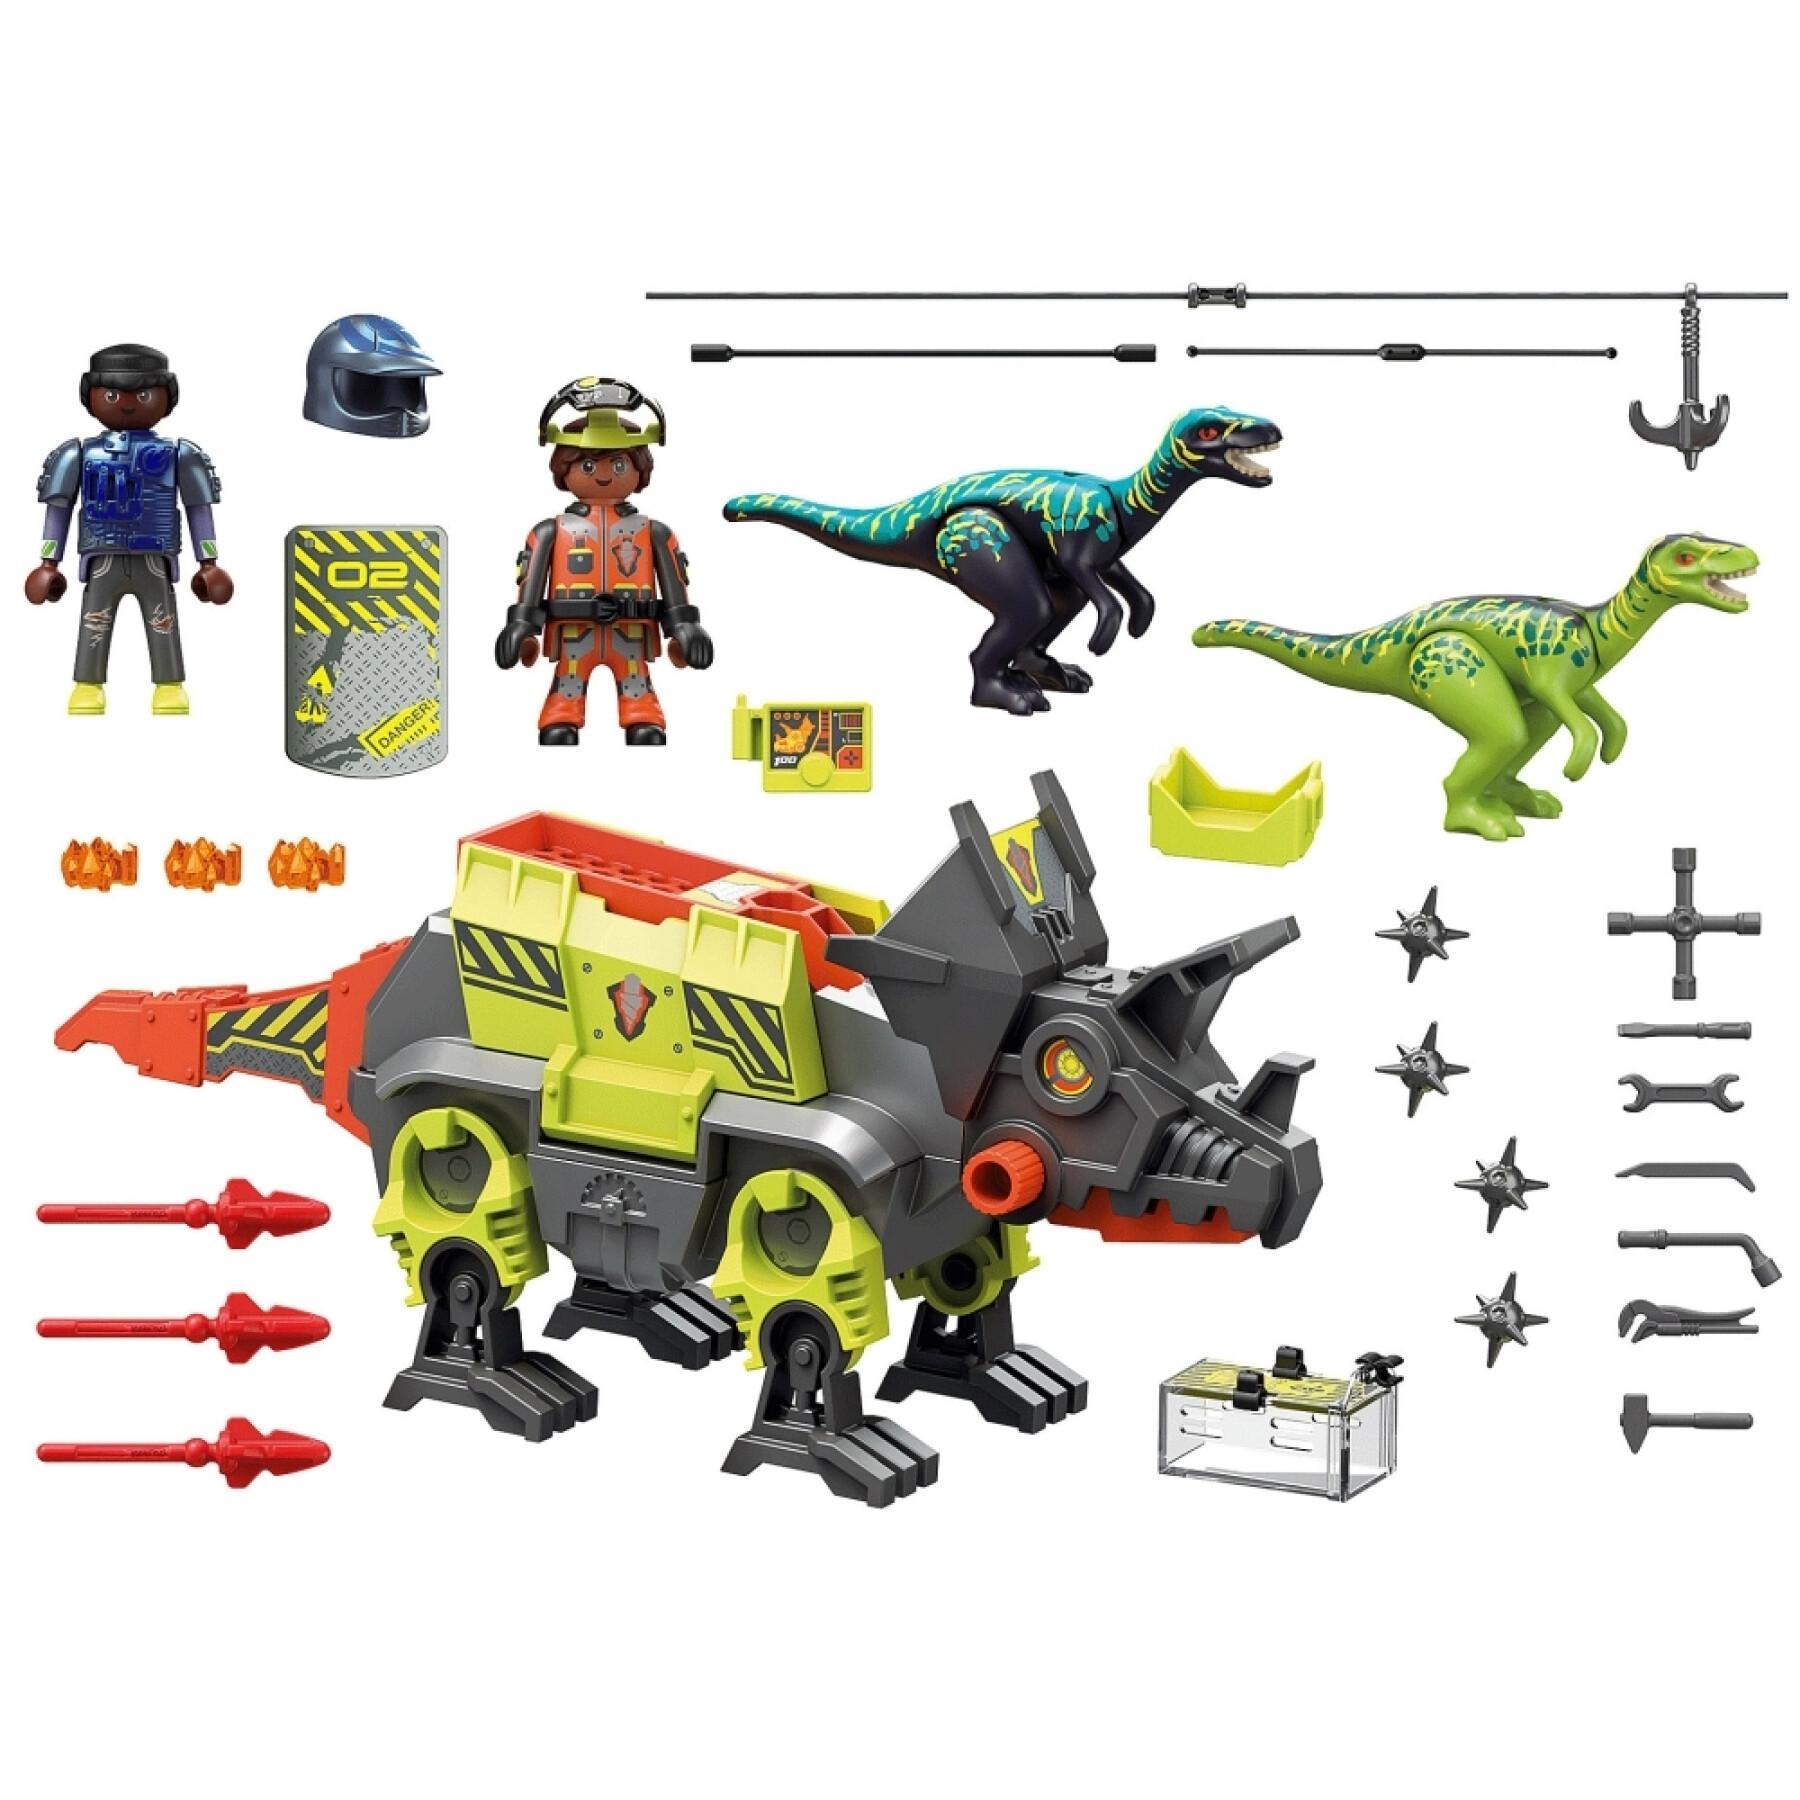 Macchina da combattimento Playmobil Dino